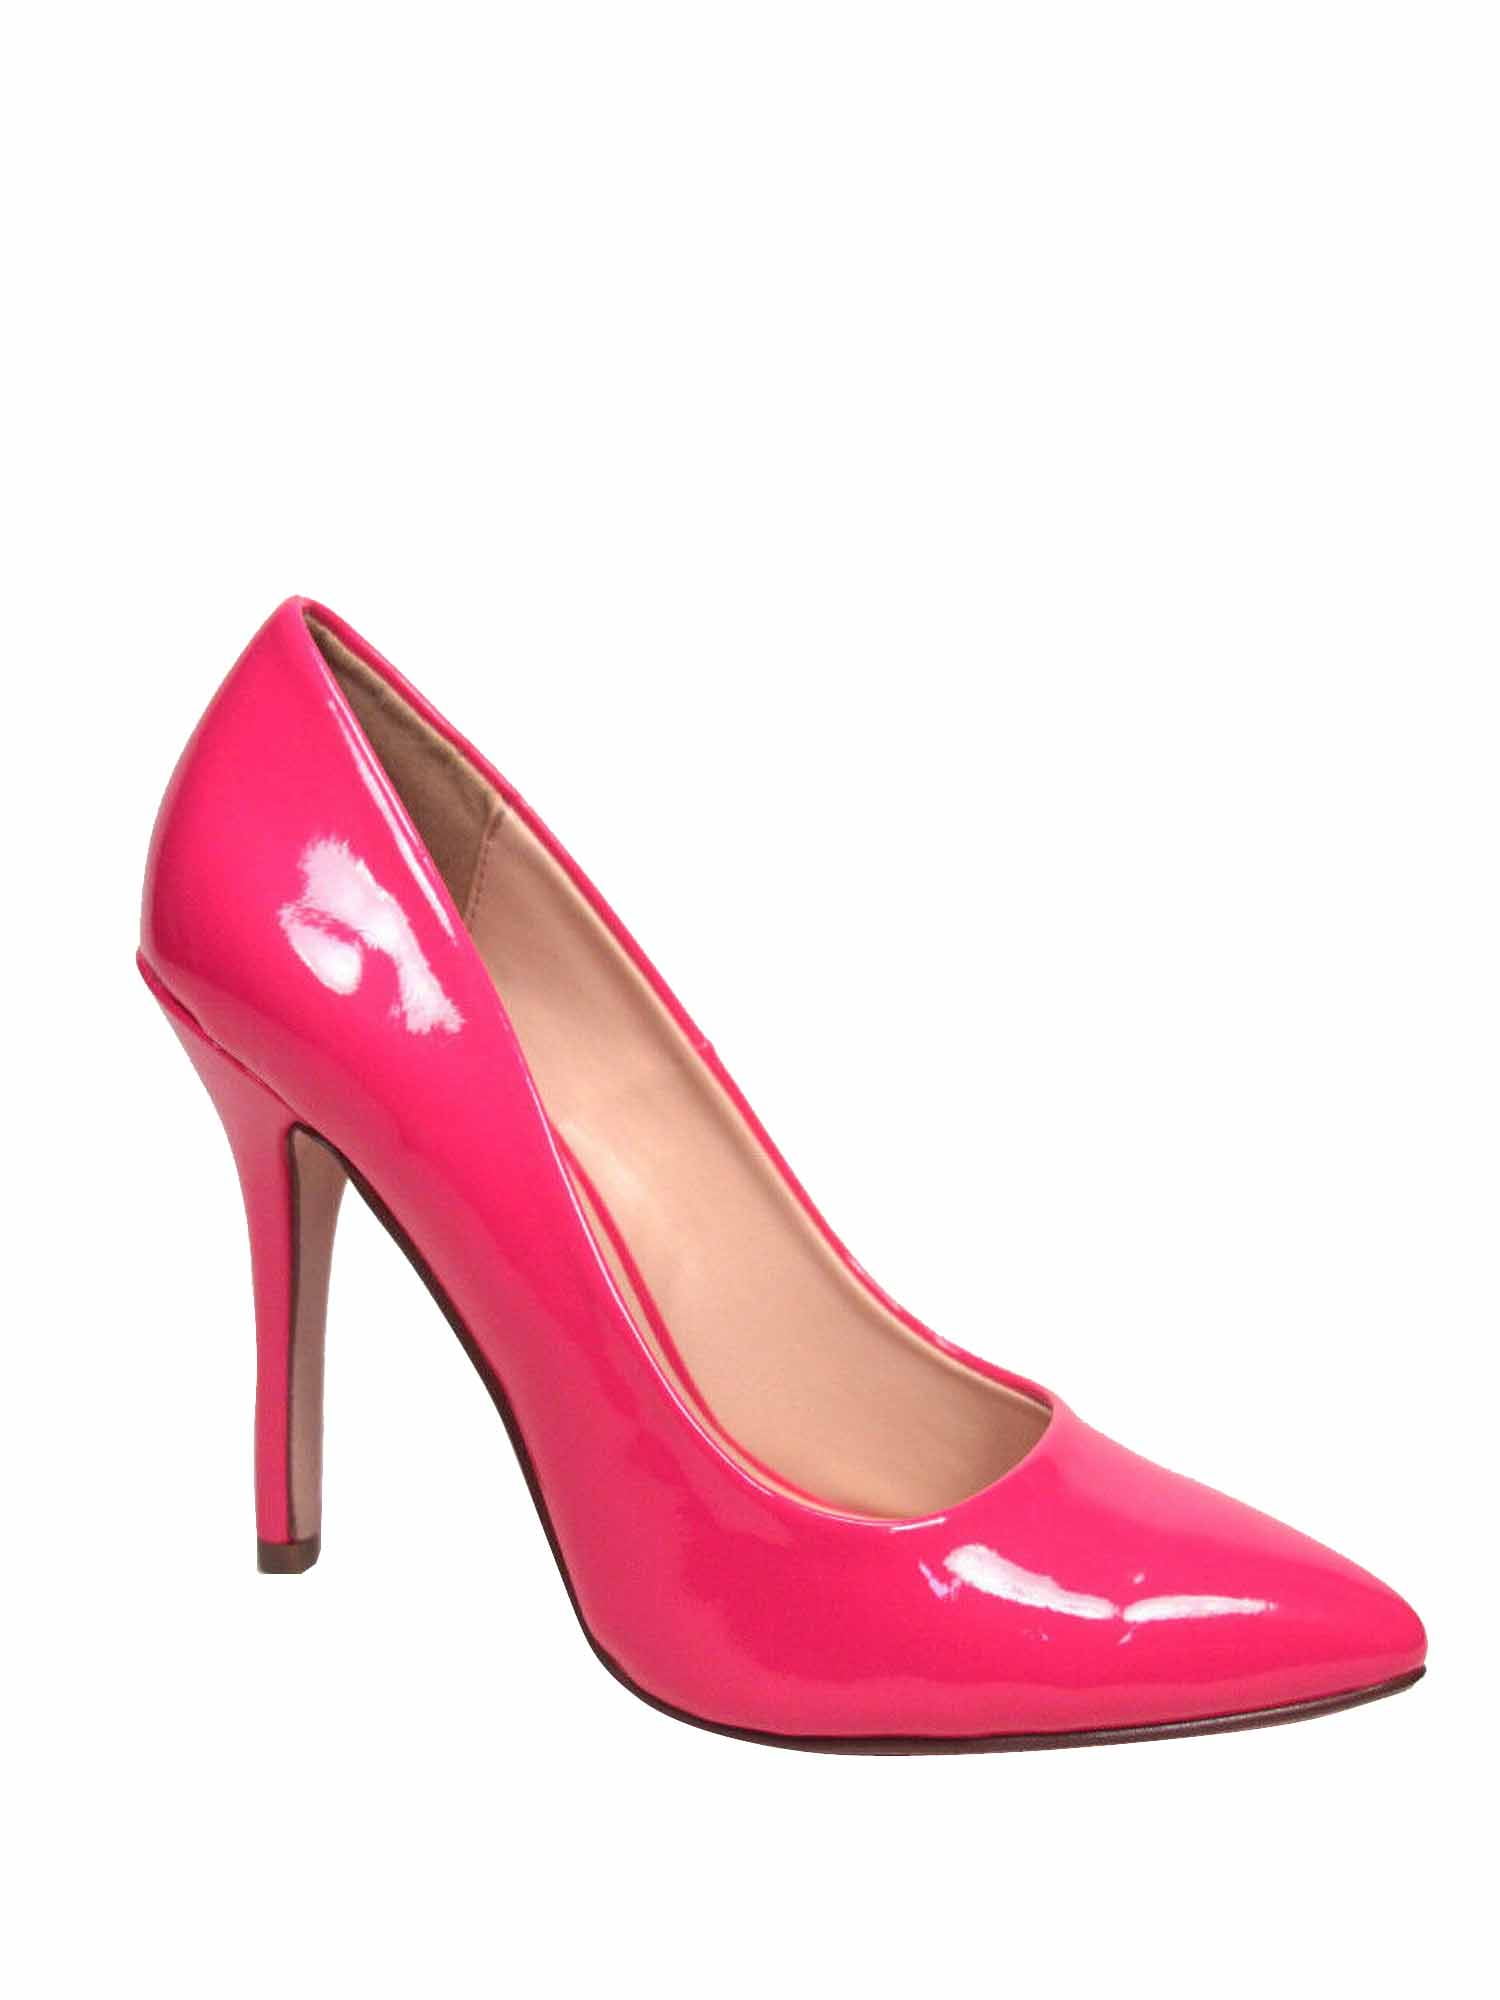 Nikole Flat Sandals - Hot Pink - GLITTER FASHION